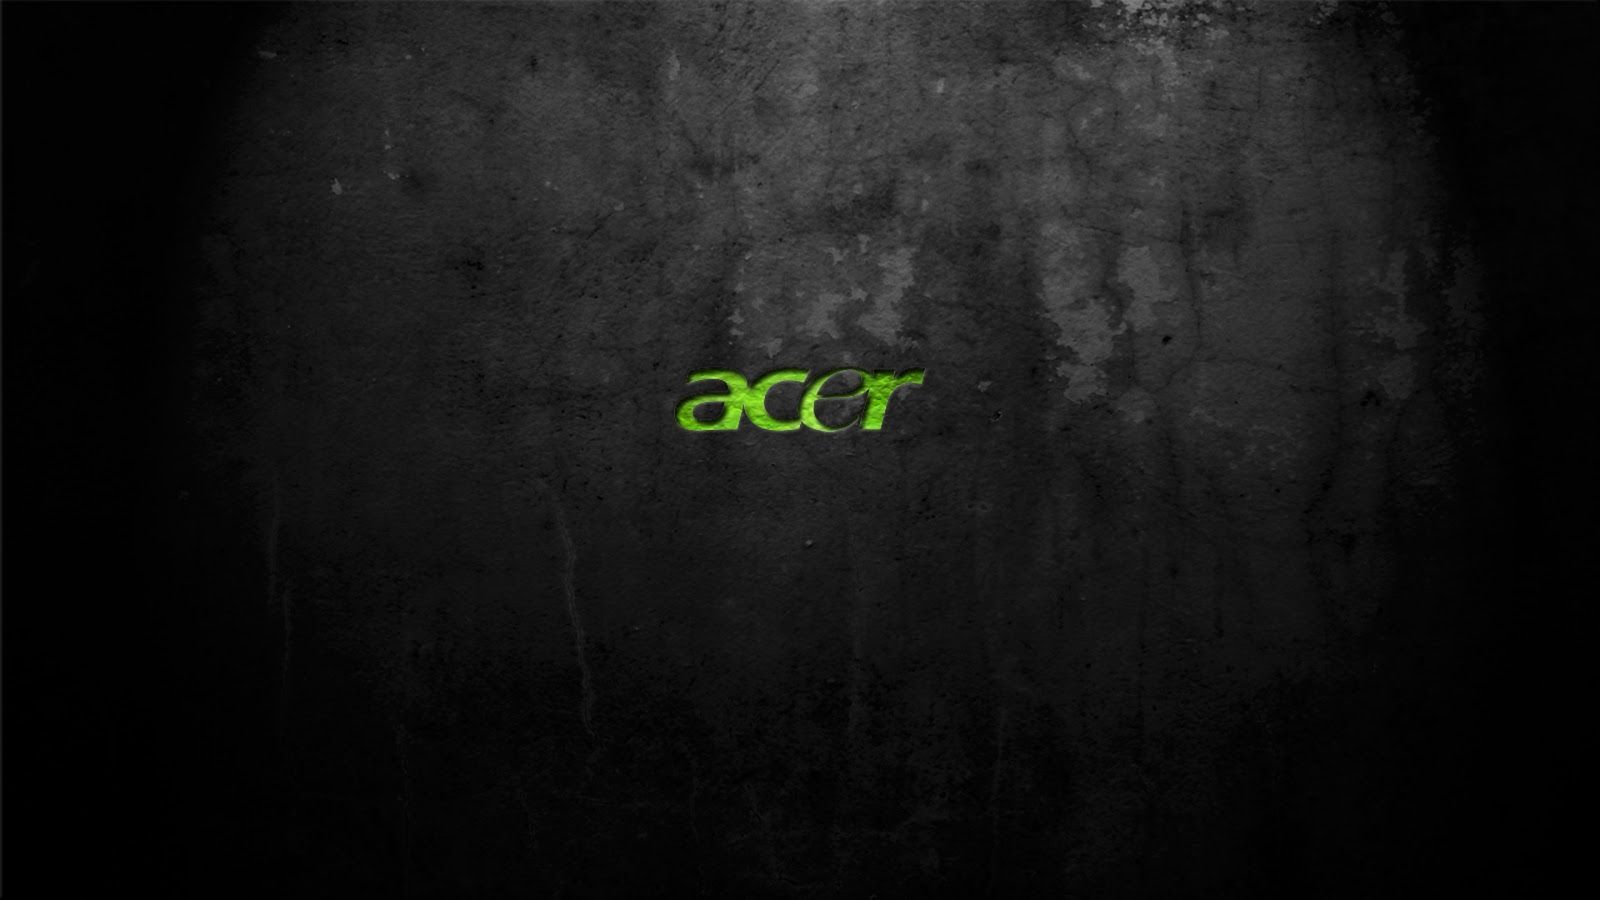 Acer Predator Wallpaper 1920x1080